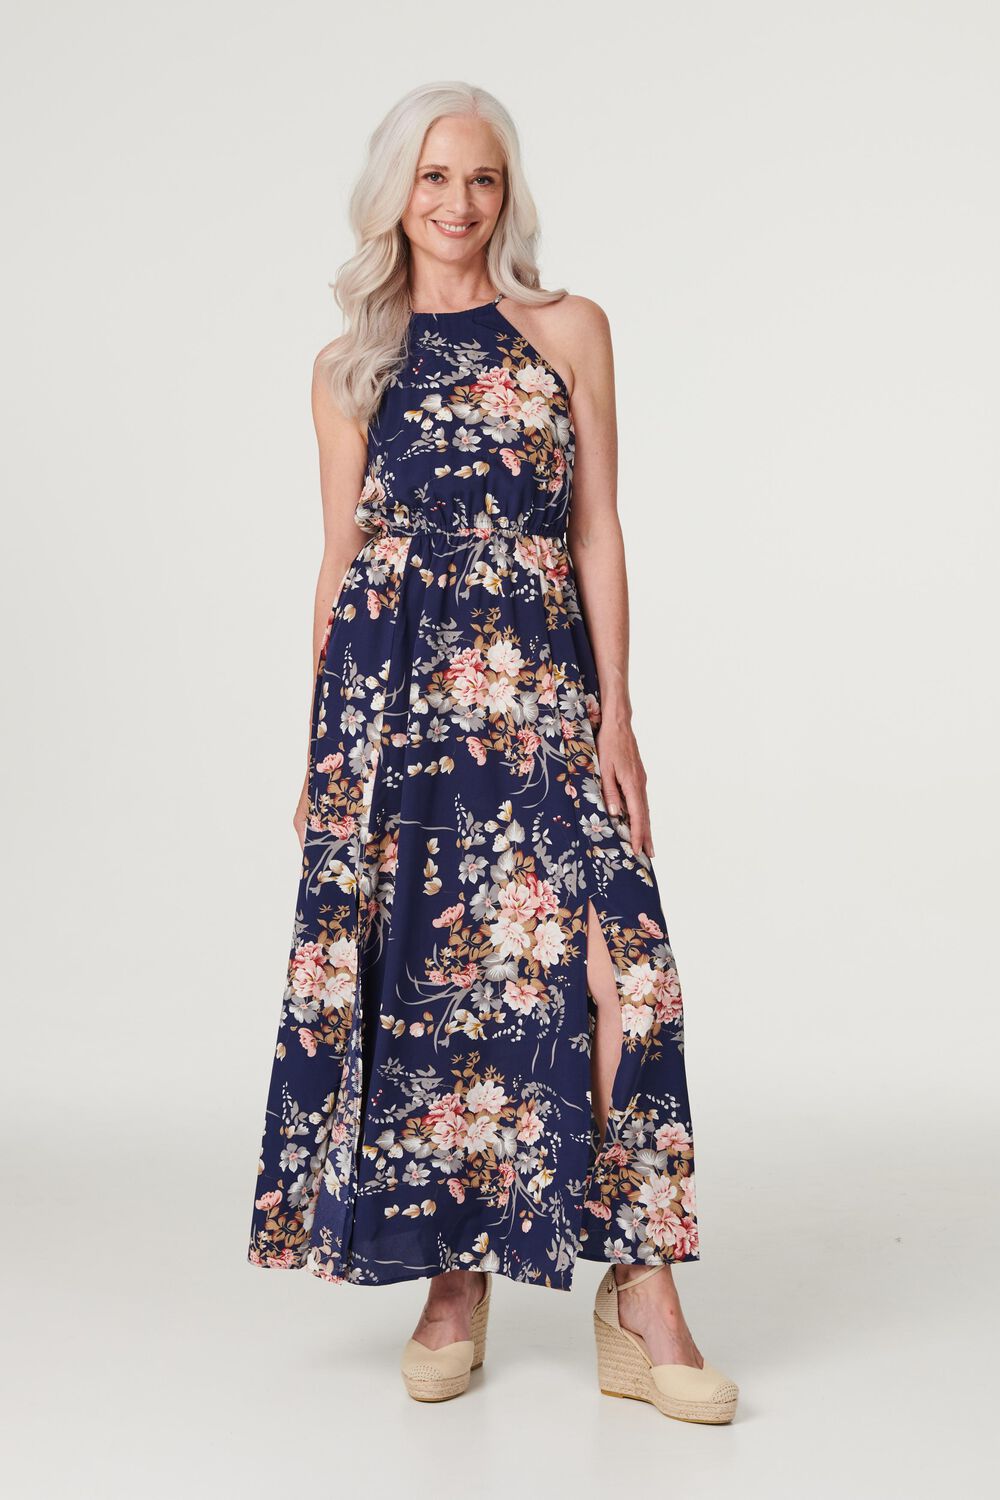 Izabel London Navy - Floral Halter Neck Maxi Dress, Size: 16